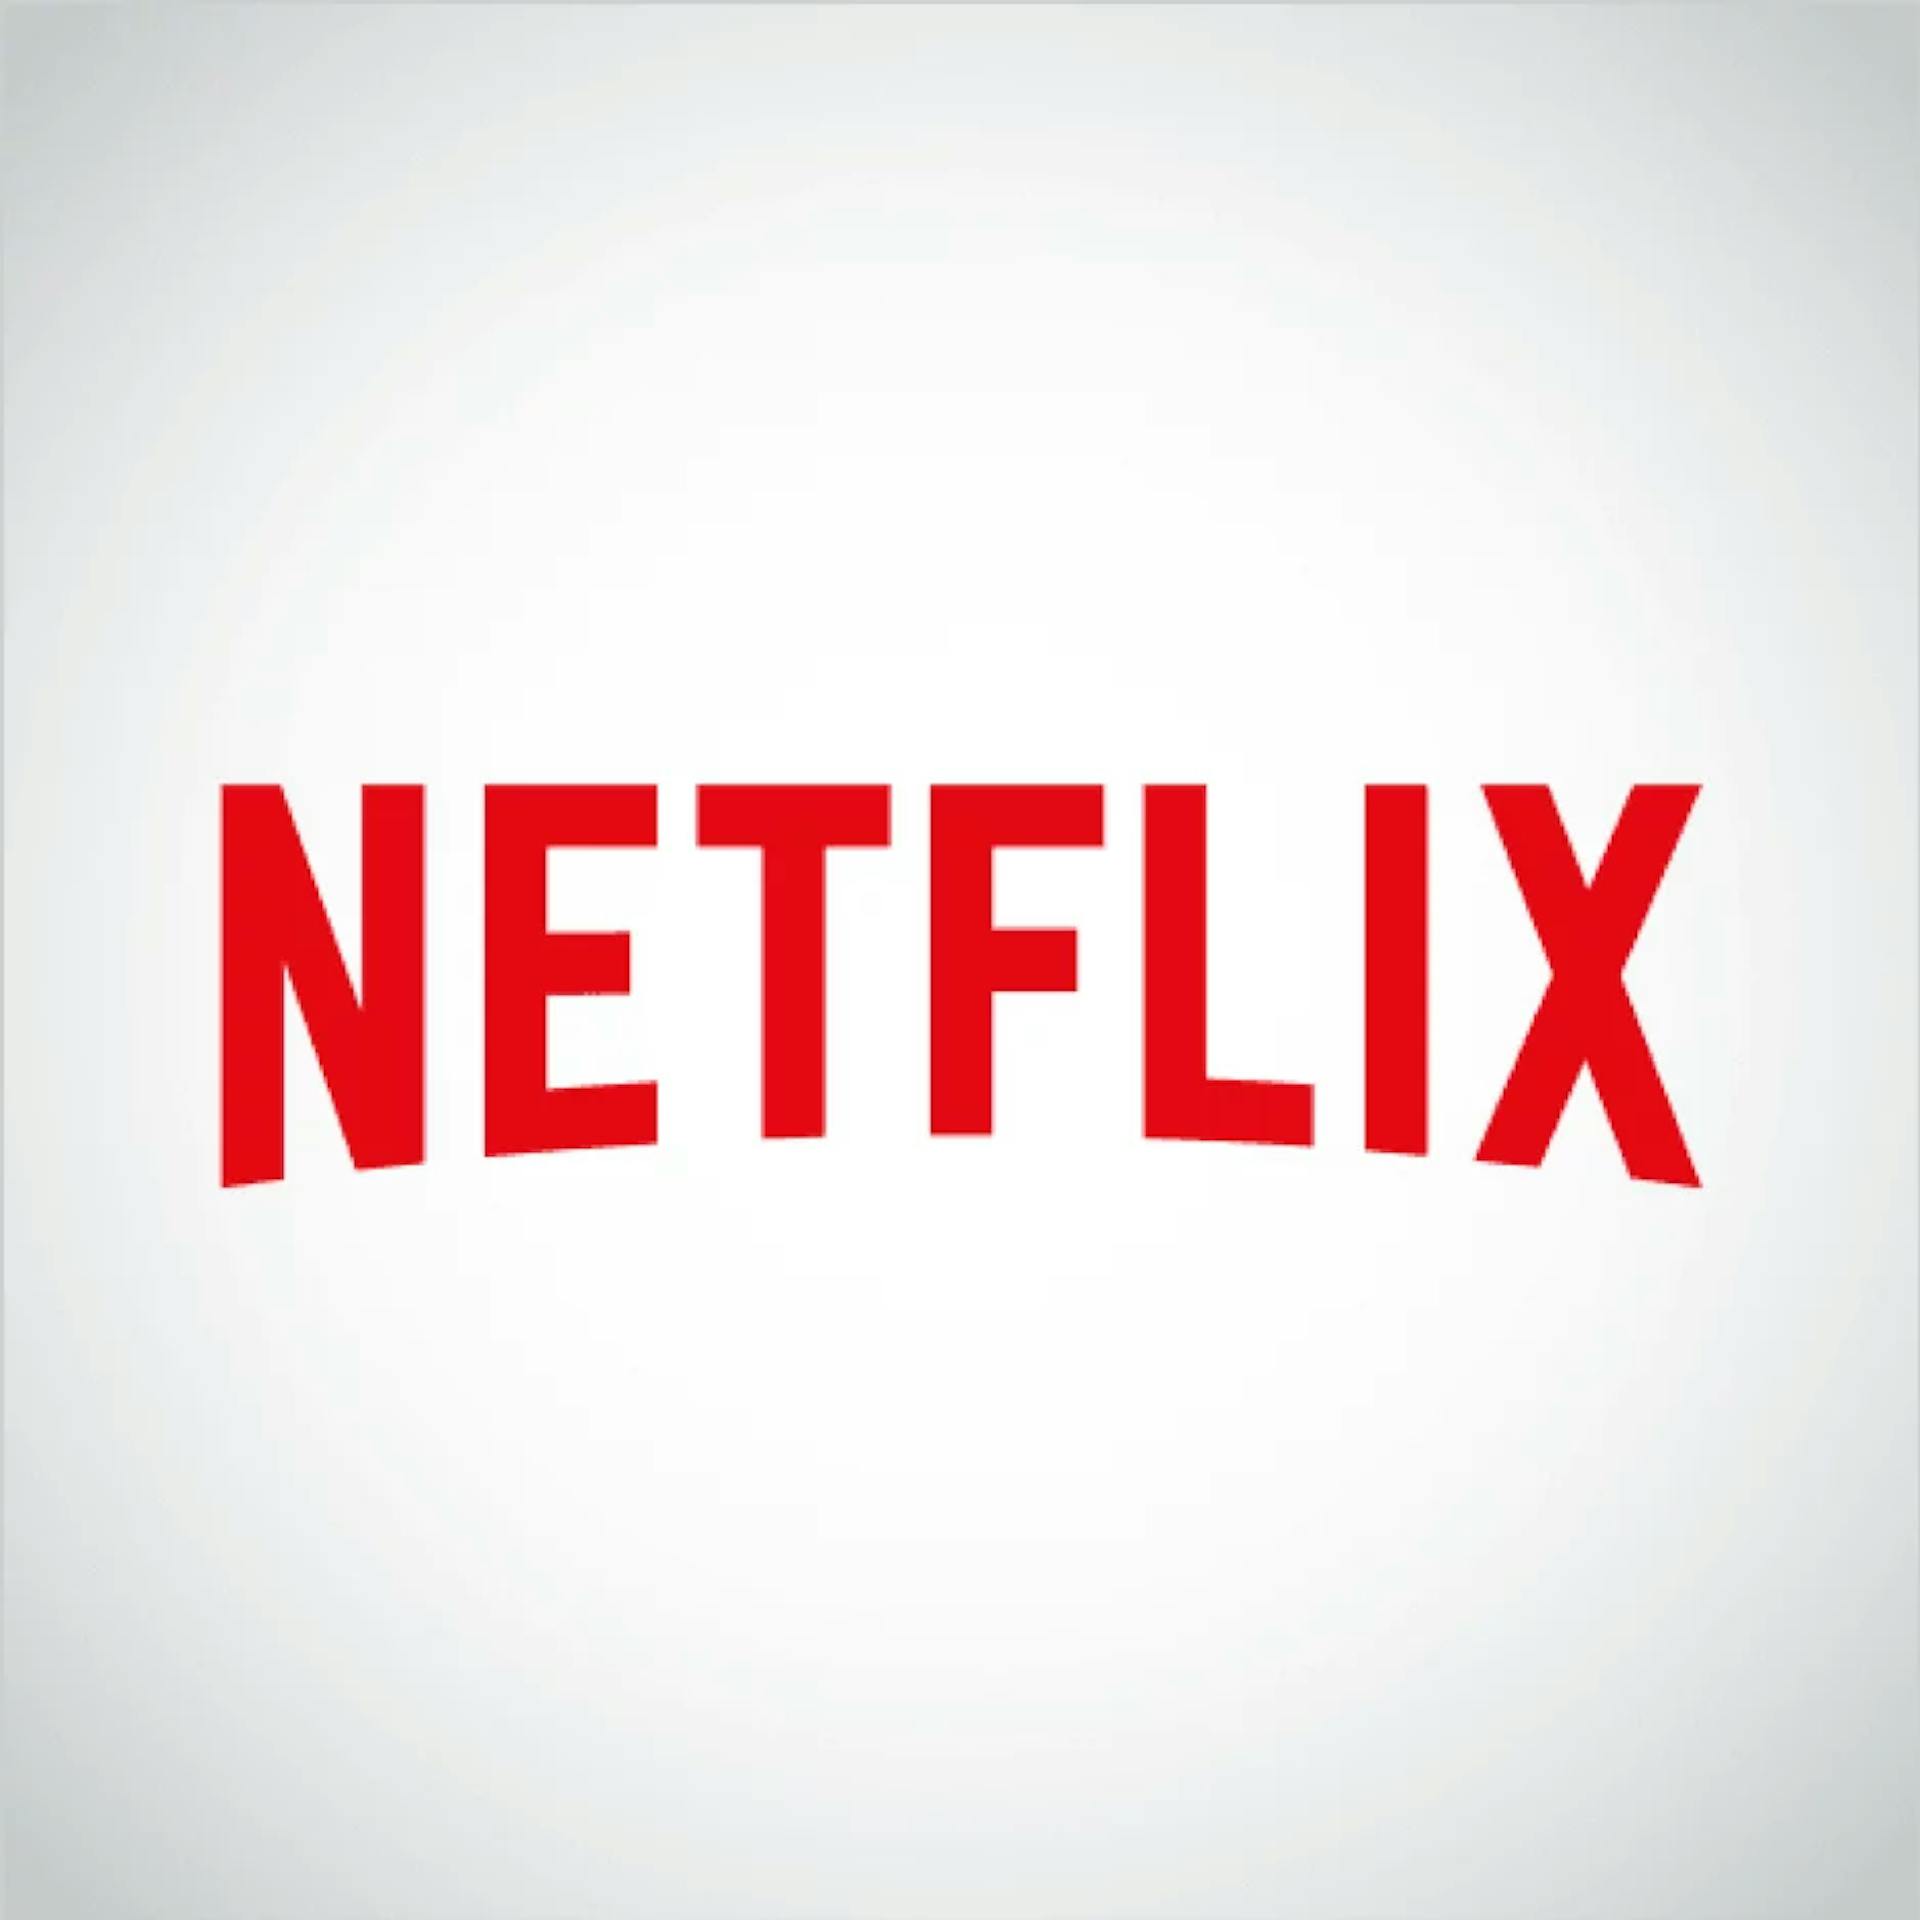 The current Netflix logo